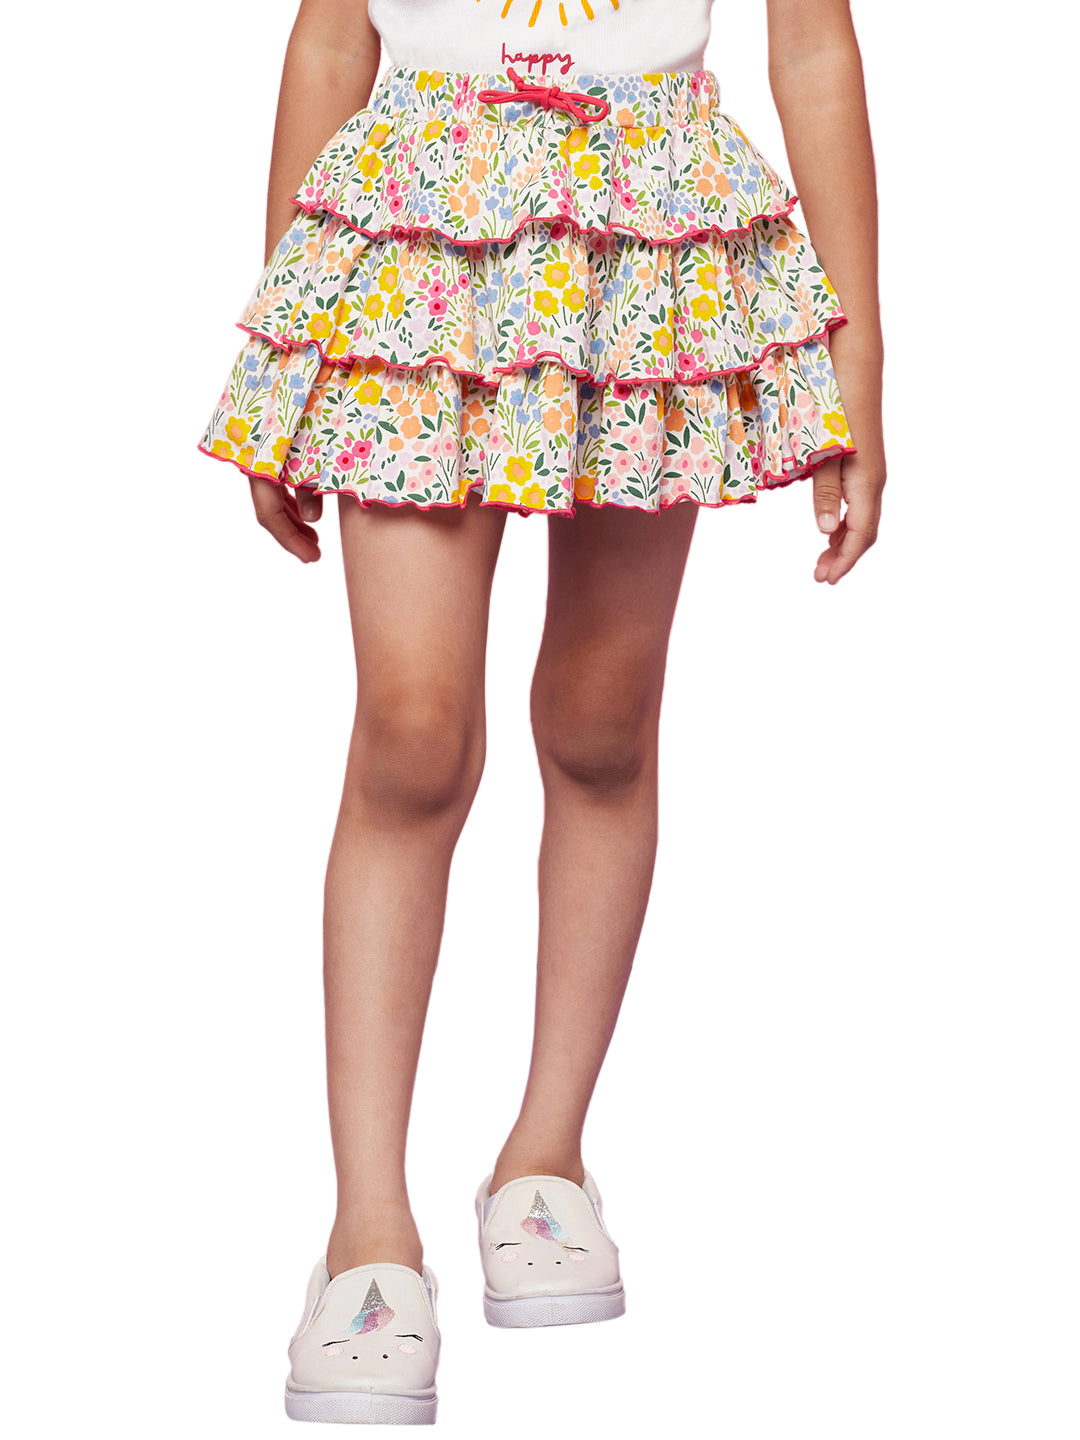 Kid Girls' Sun Print White T-Shirt and Colorful Printed Skirt